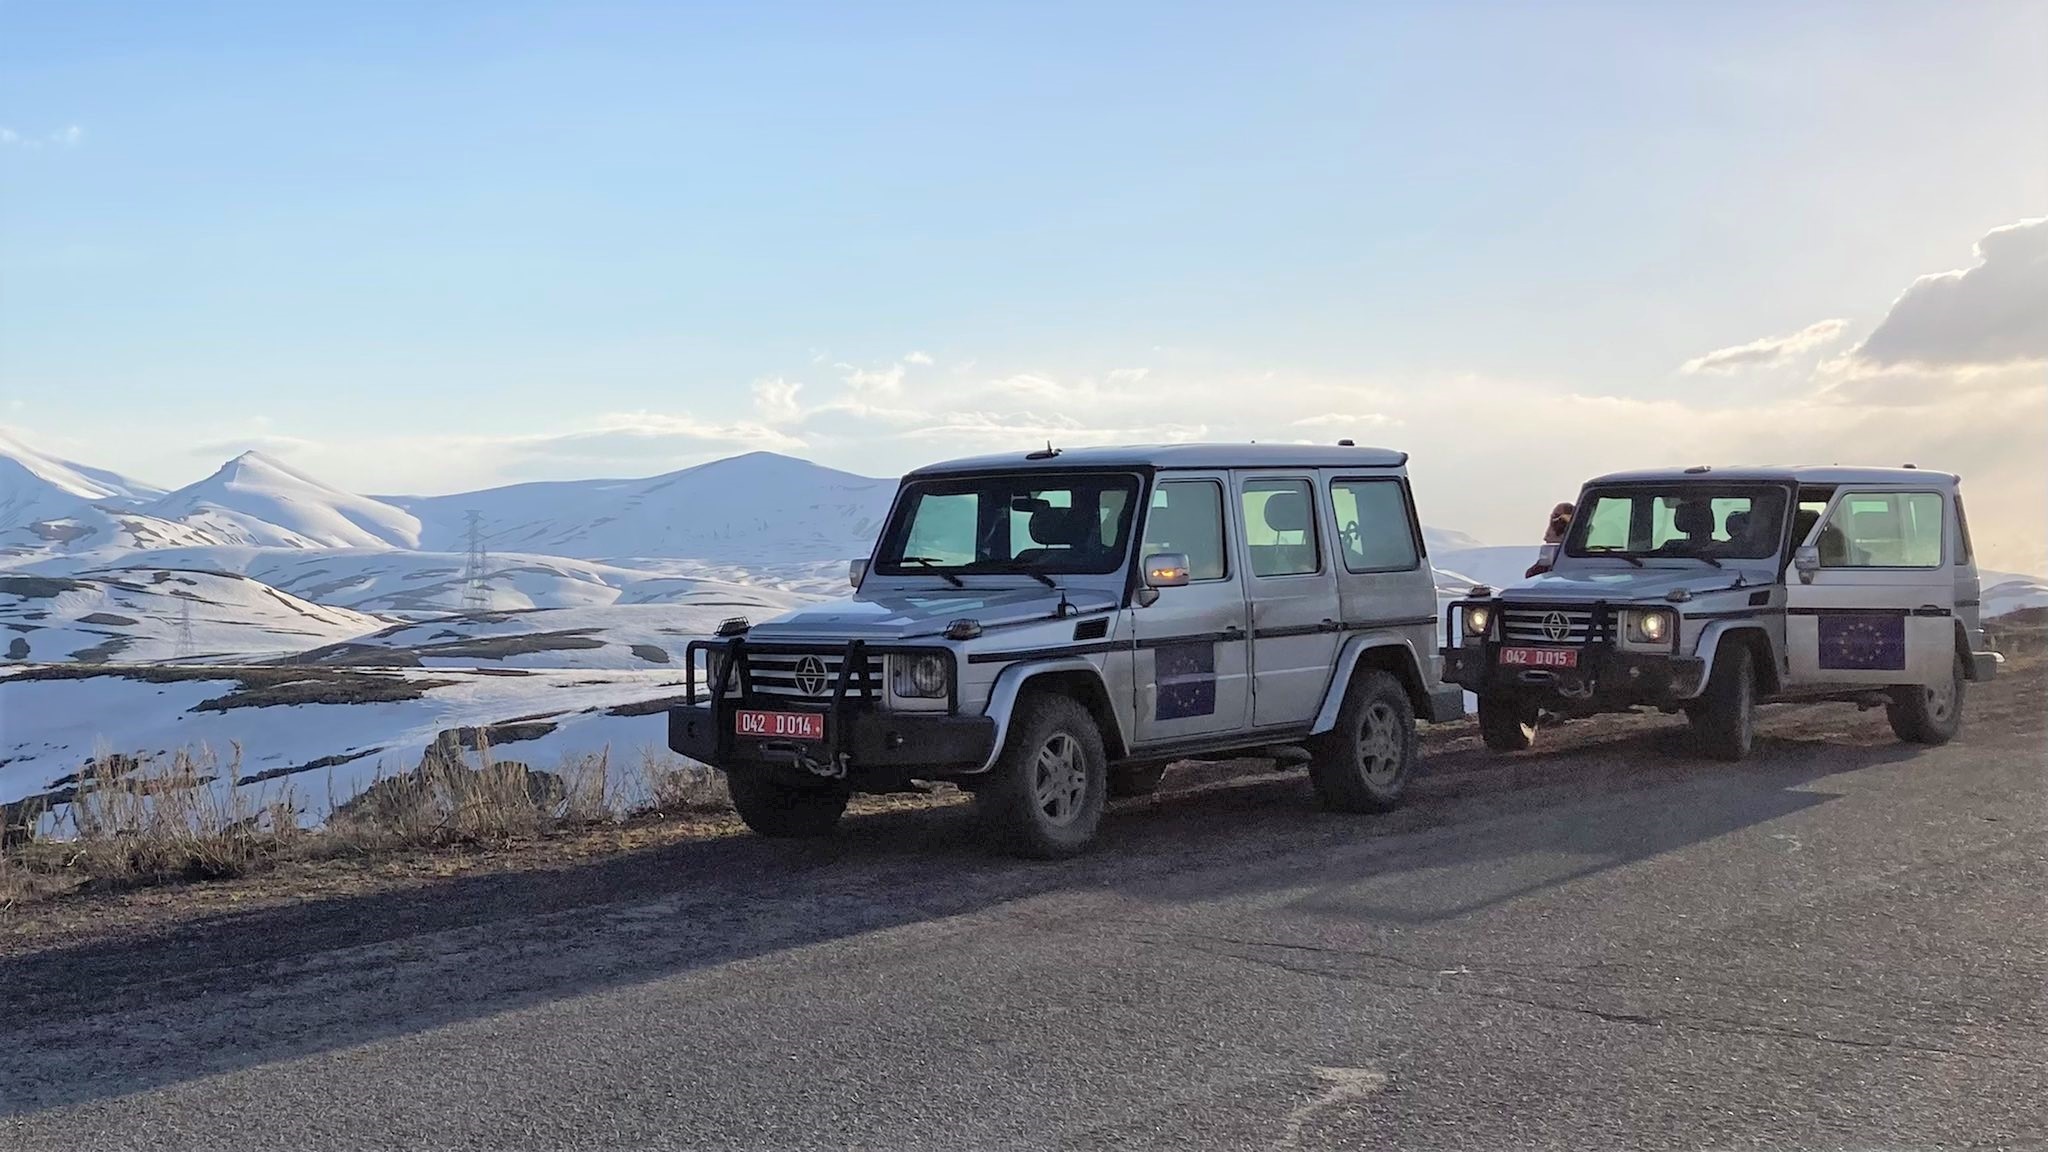 EU prepares for border mission, as Armenia, Azerbaijan spar over reopening transit links